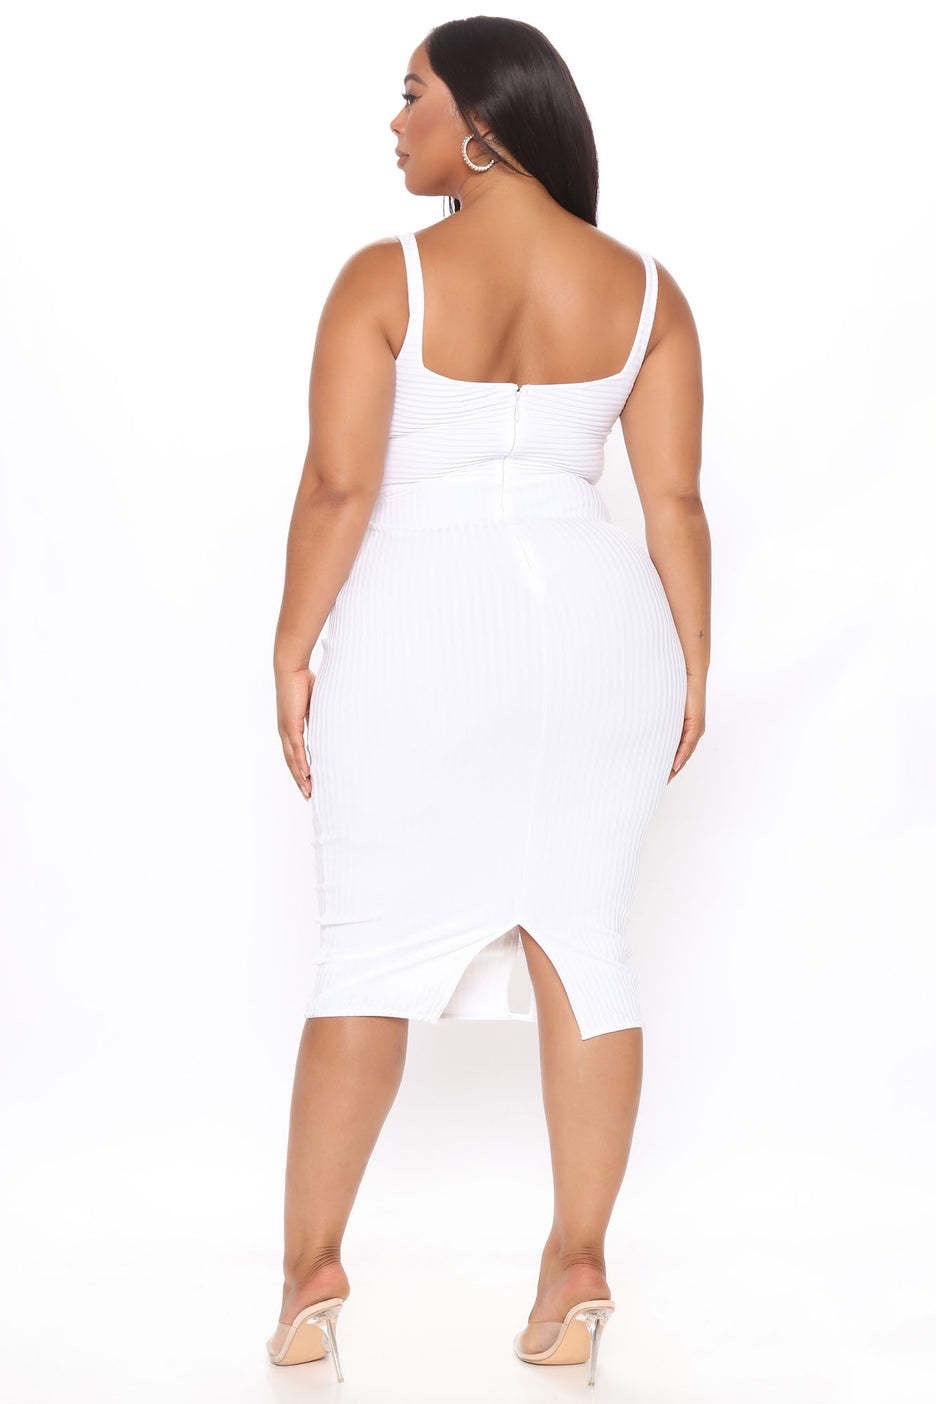 Rihanna White dress